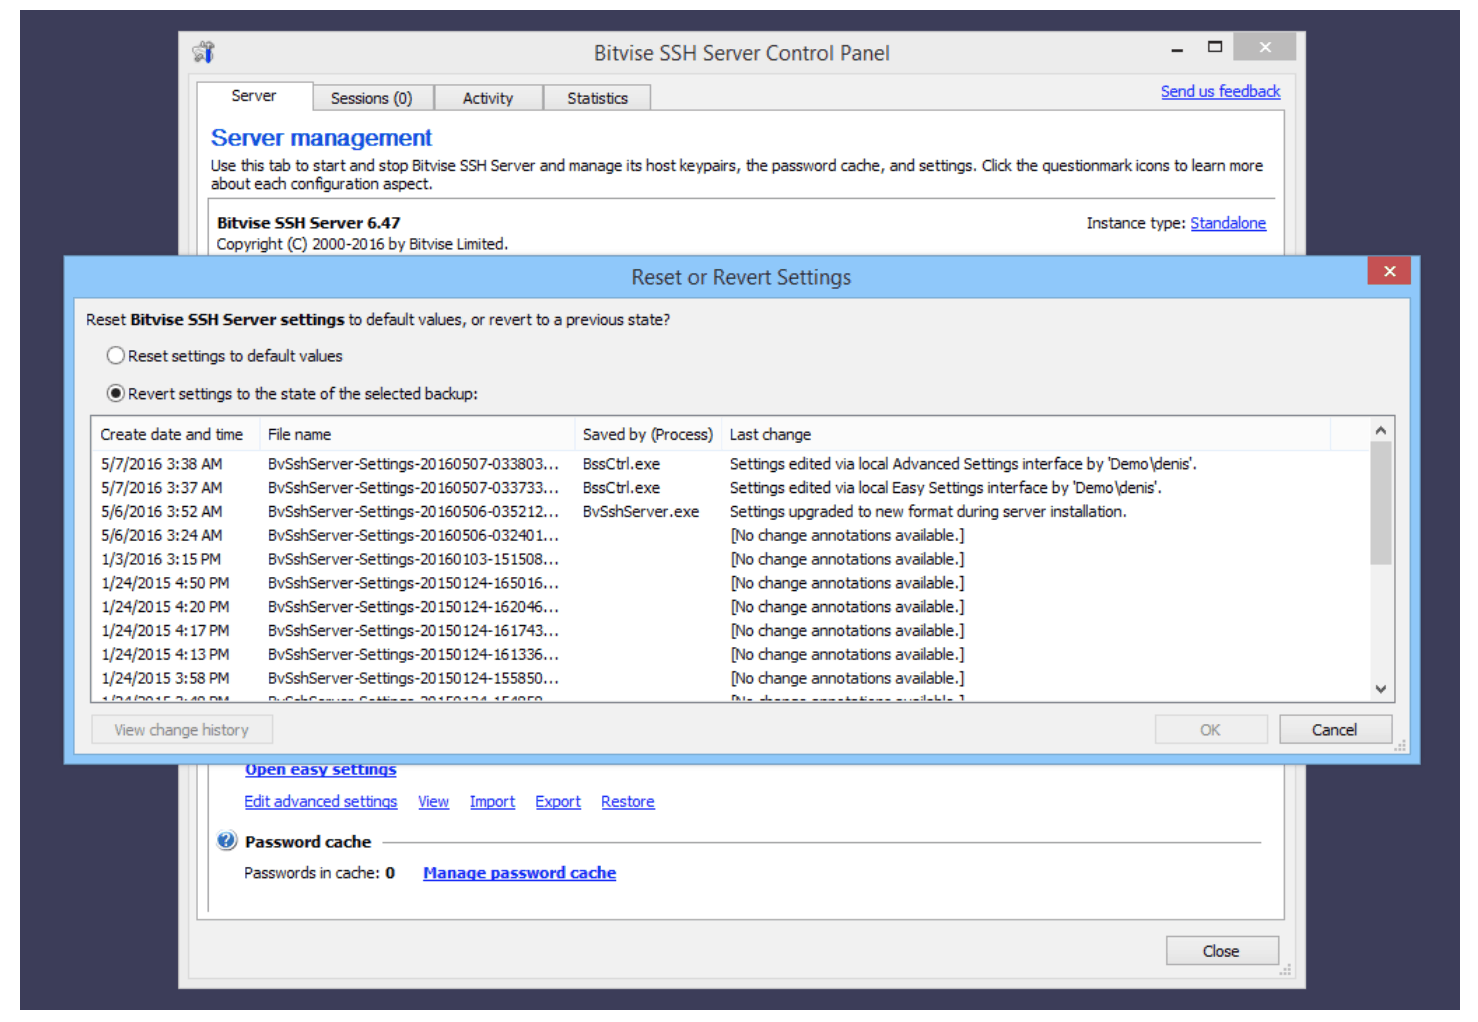 Bitvise SSH Client 9.31 for ios instal